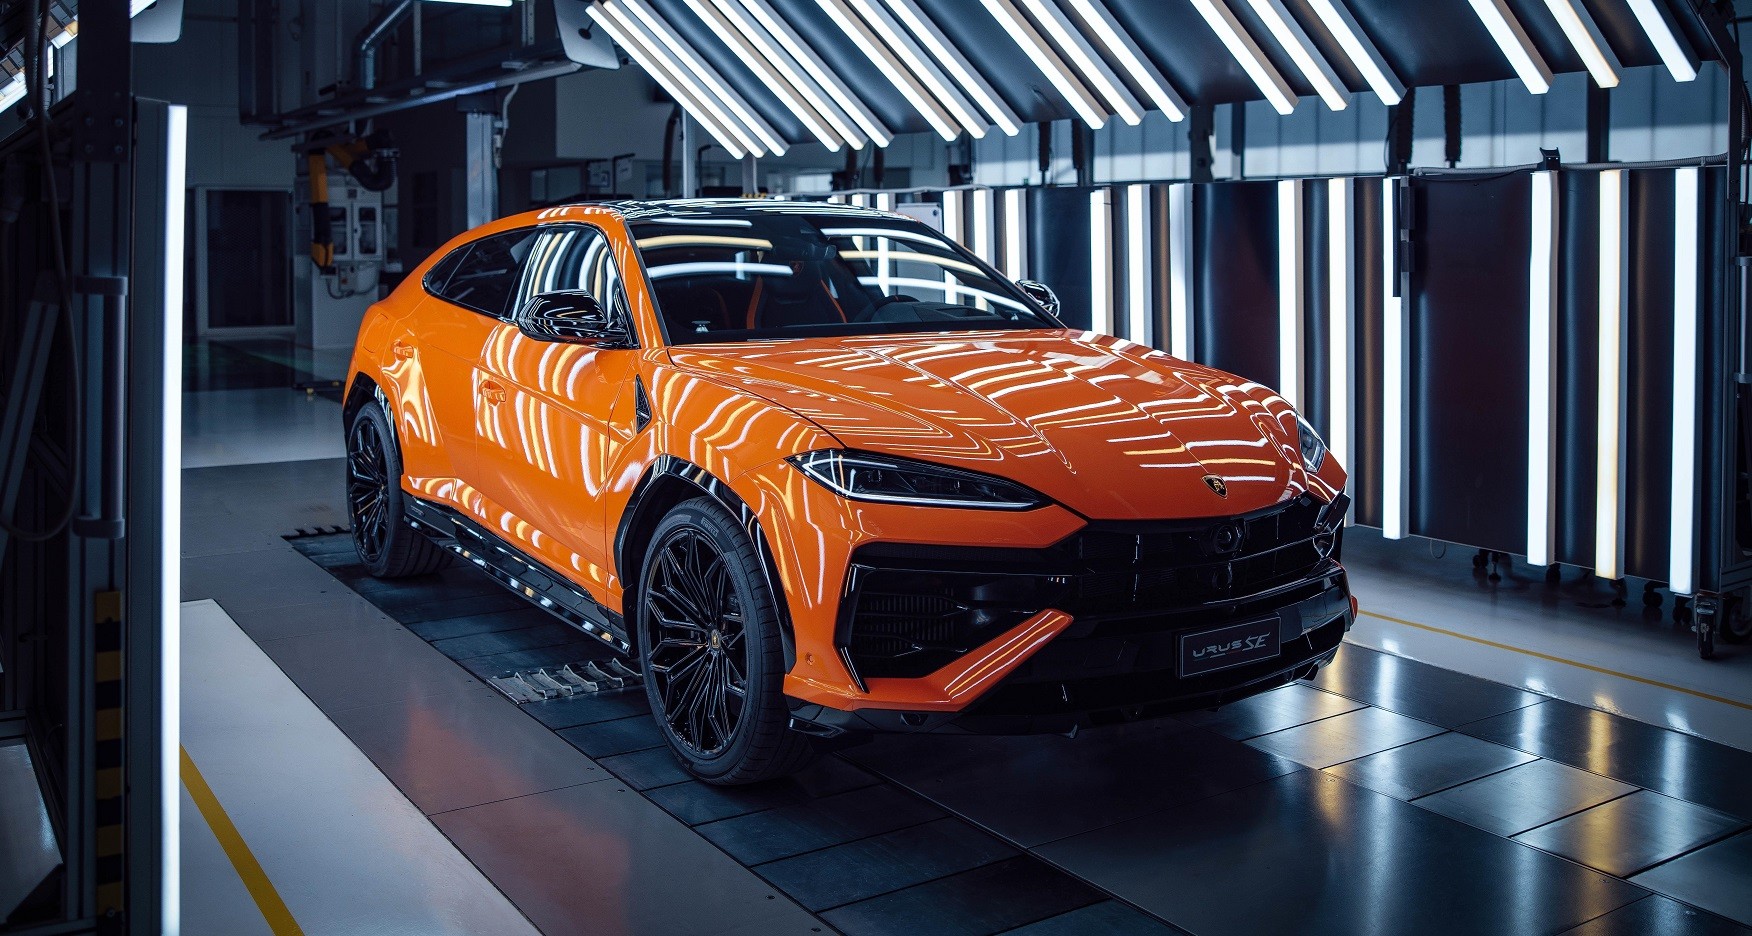 Lamborghini Urus híbrido quer ser supercarro econômico mesmo com 800 cv